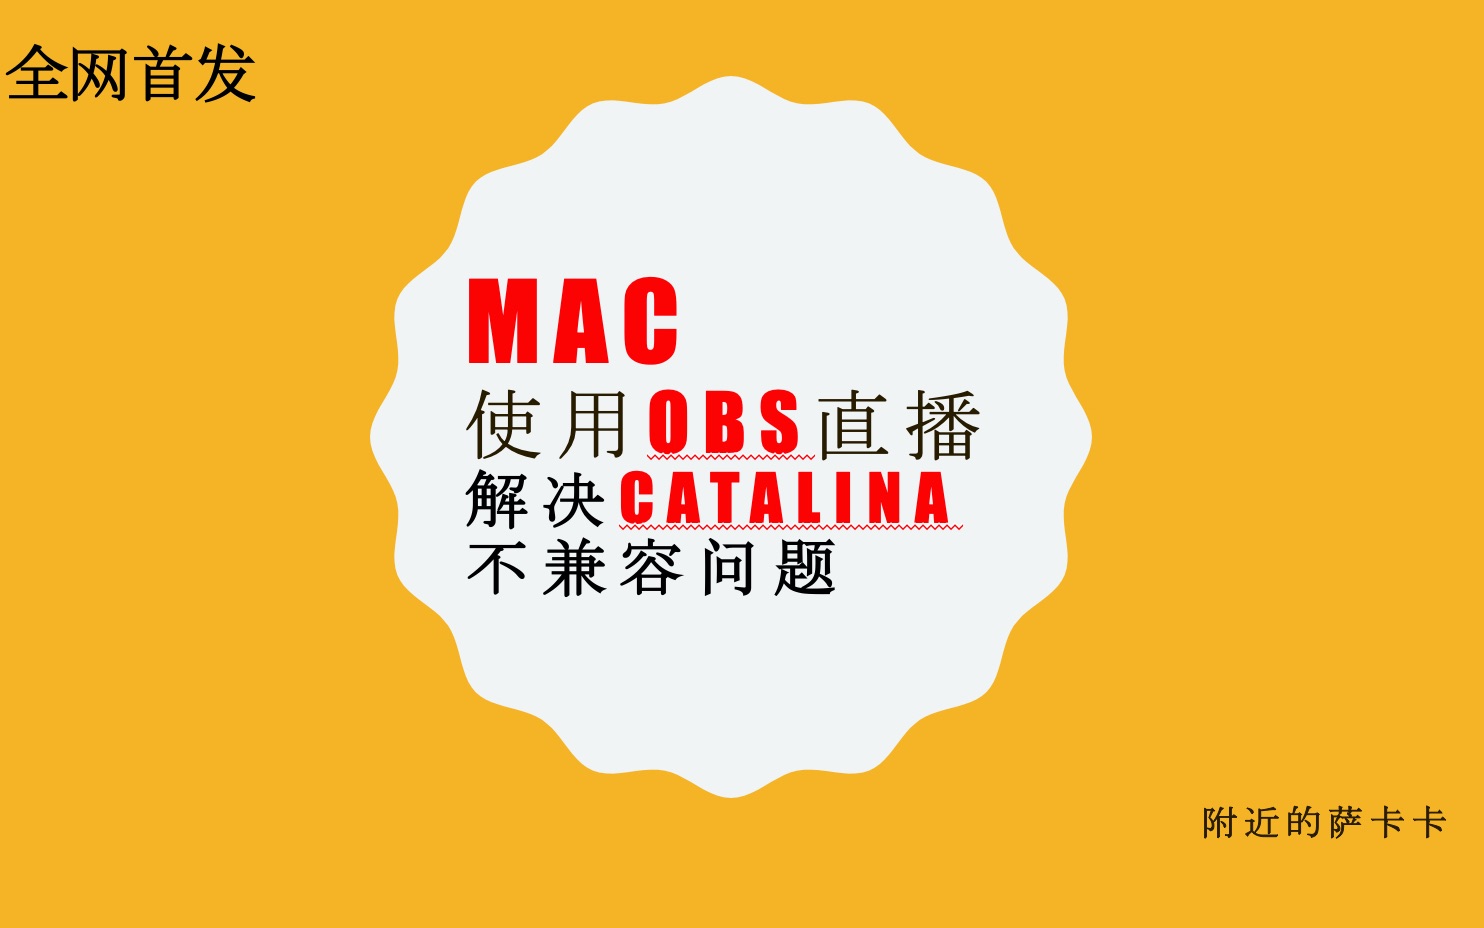 Mac使用obs直播 解决catalina不兼容问题 哔哩哔哩 つロ干杯 Bilibili